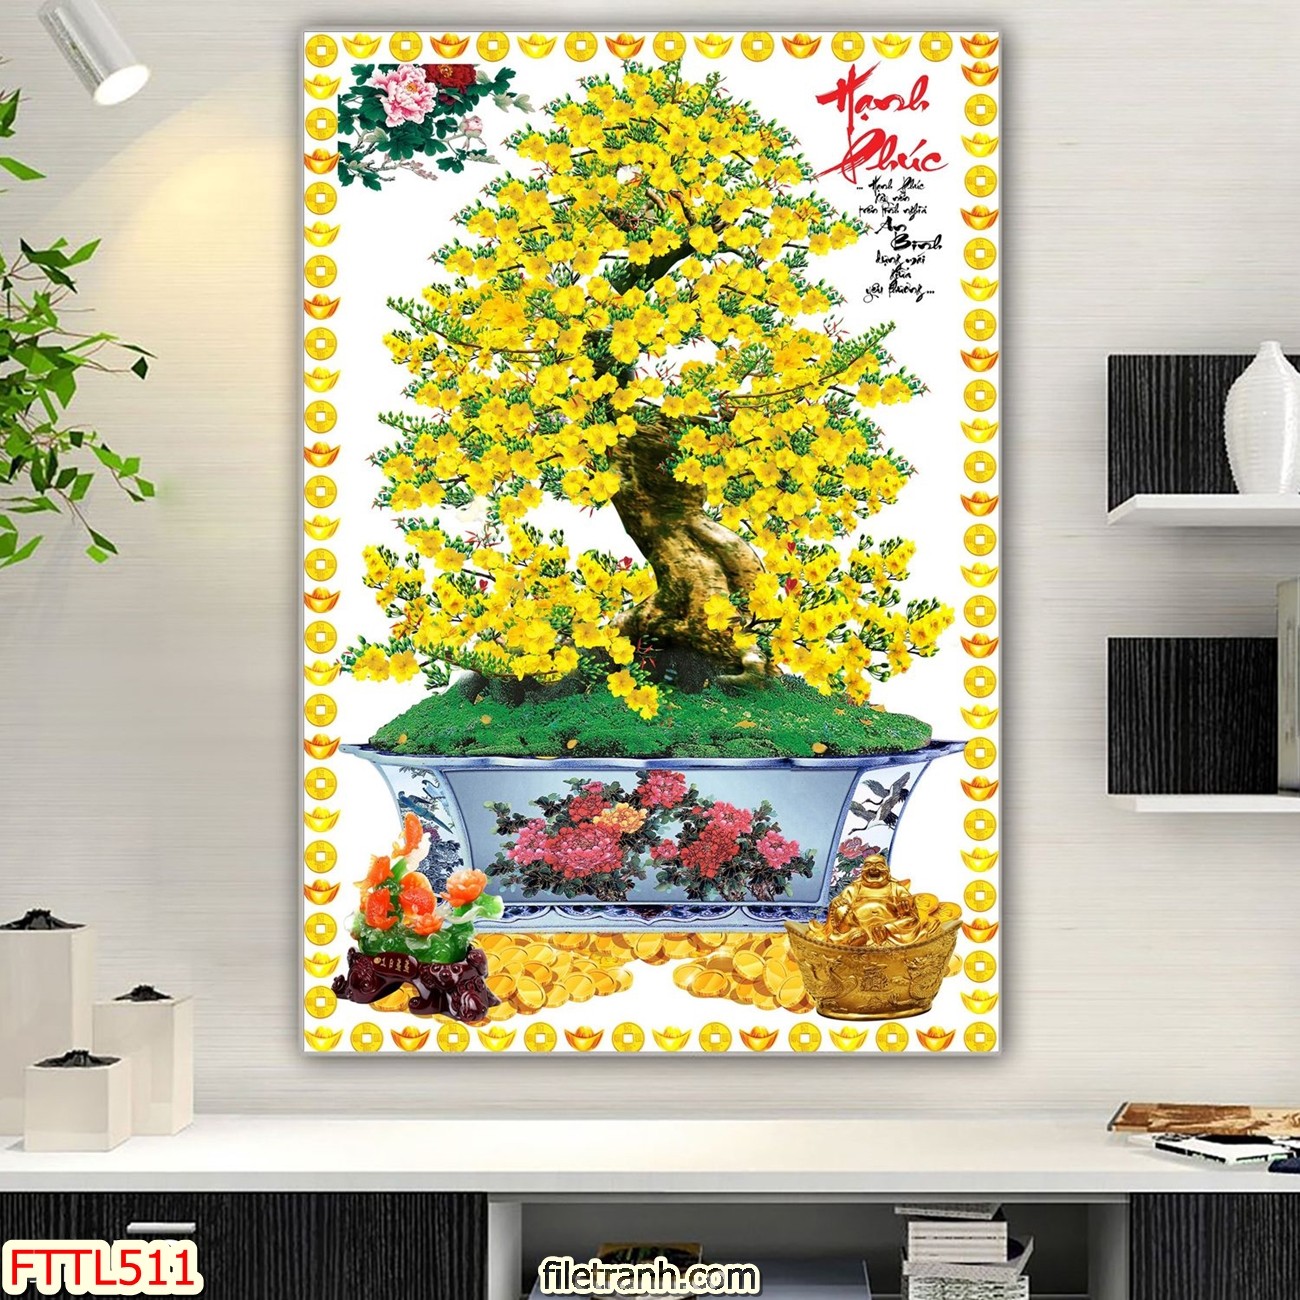 https://filetranh.com/file-tranh-chau-mai-bonsai/file-tranh-chau-mai-bonsai-fttl511.html